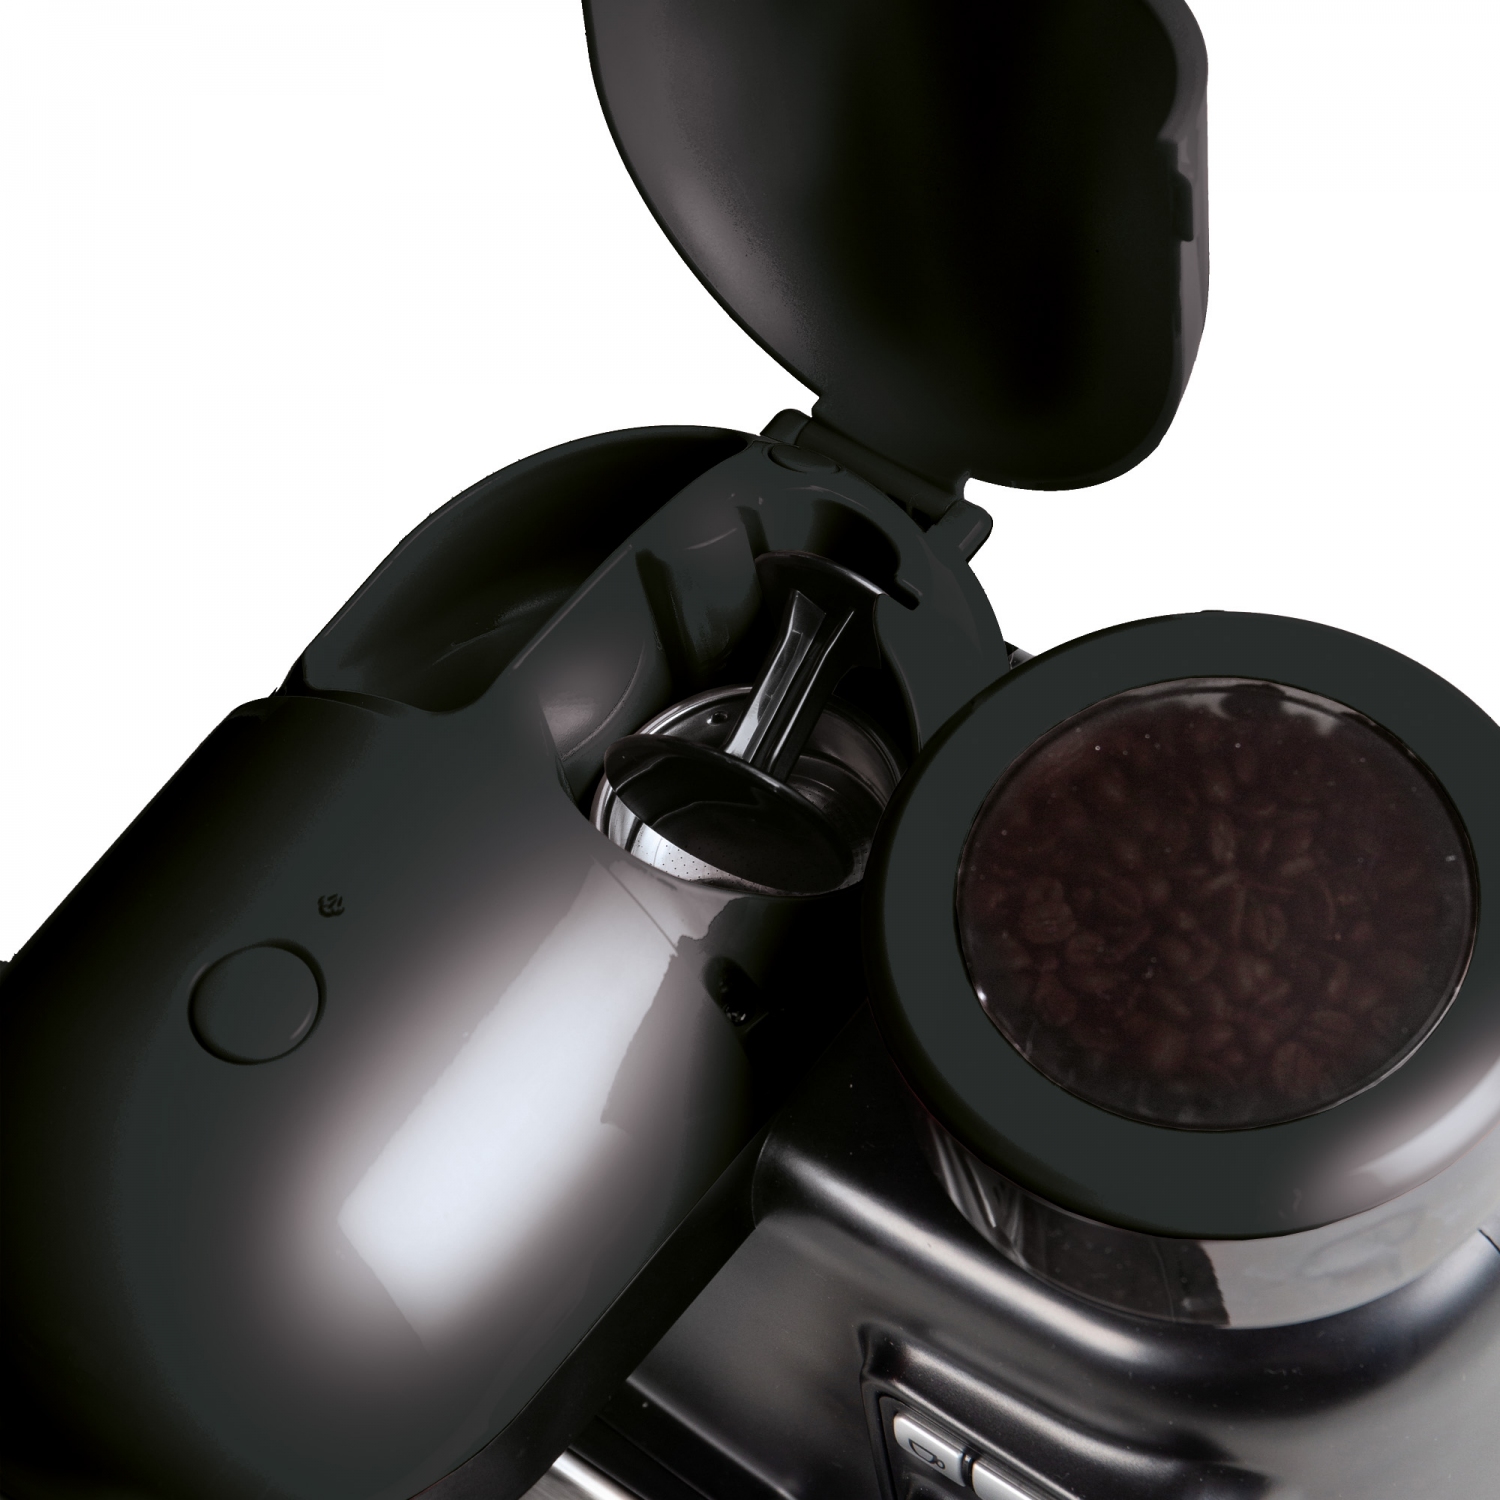 Ariete AR1319 Moderna Espresso Coffee Machine with Grinder - Black - 1